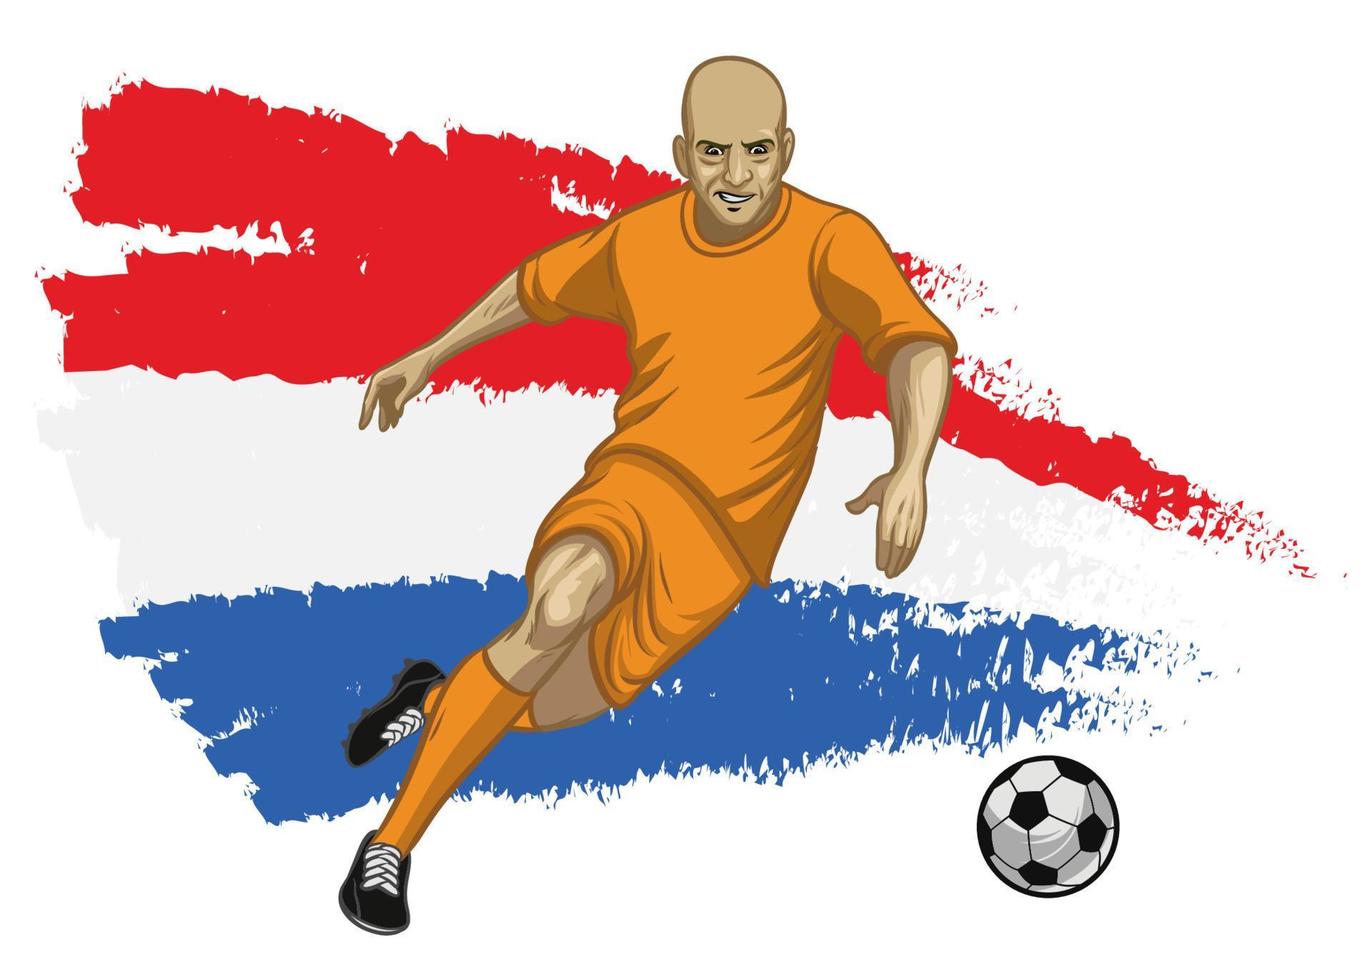 Holland voetbal speler met vlag achtergrond vector